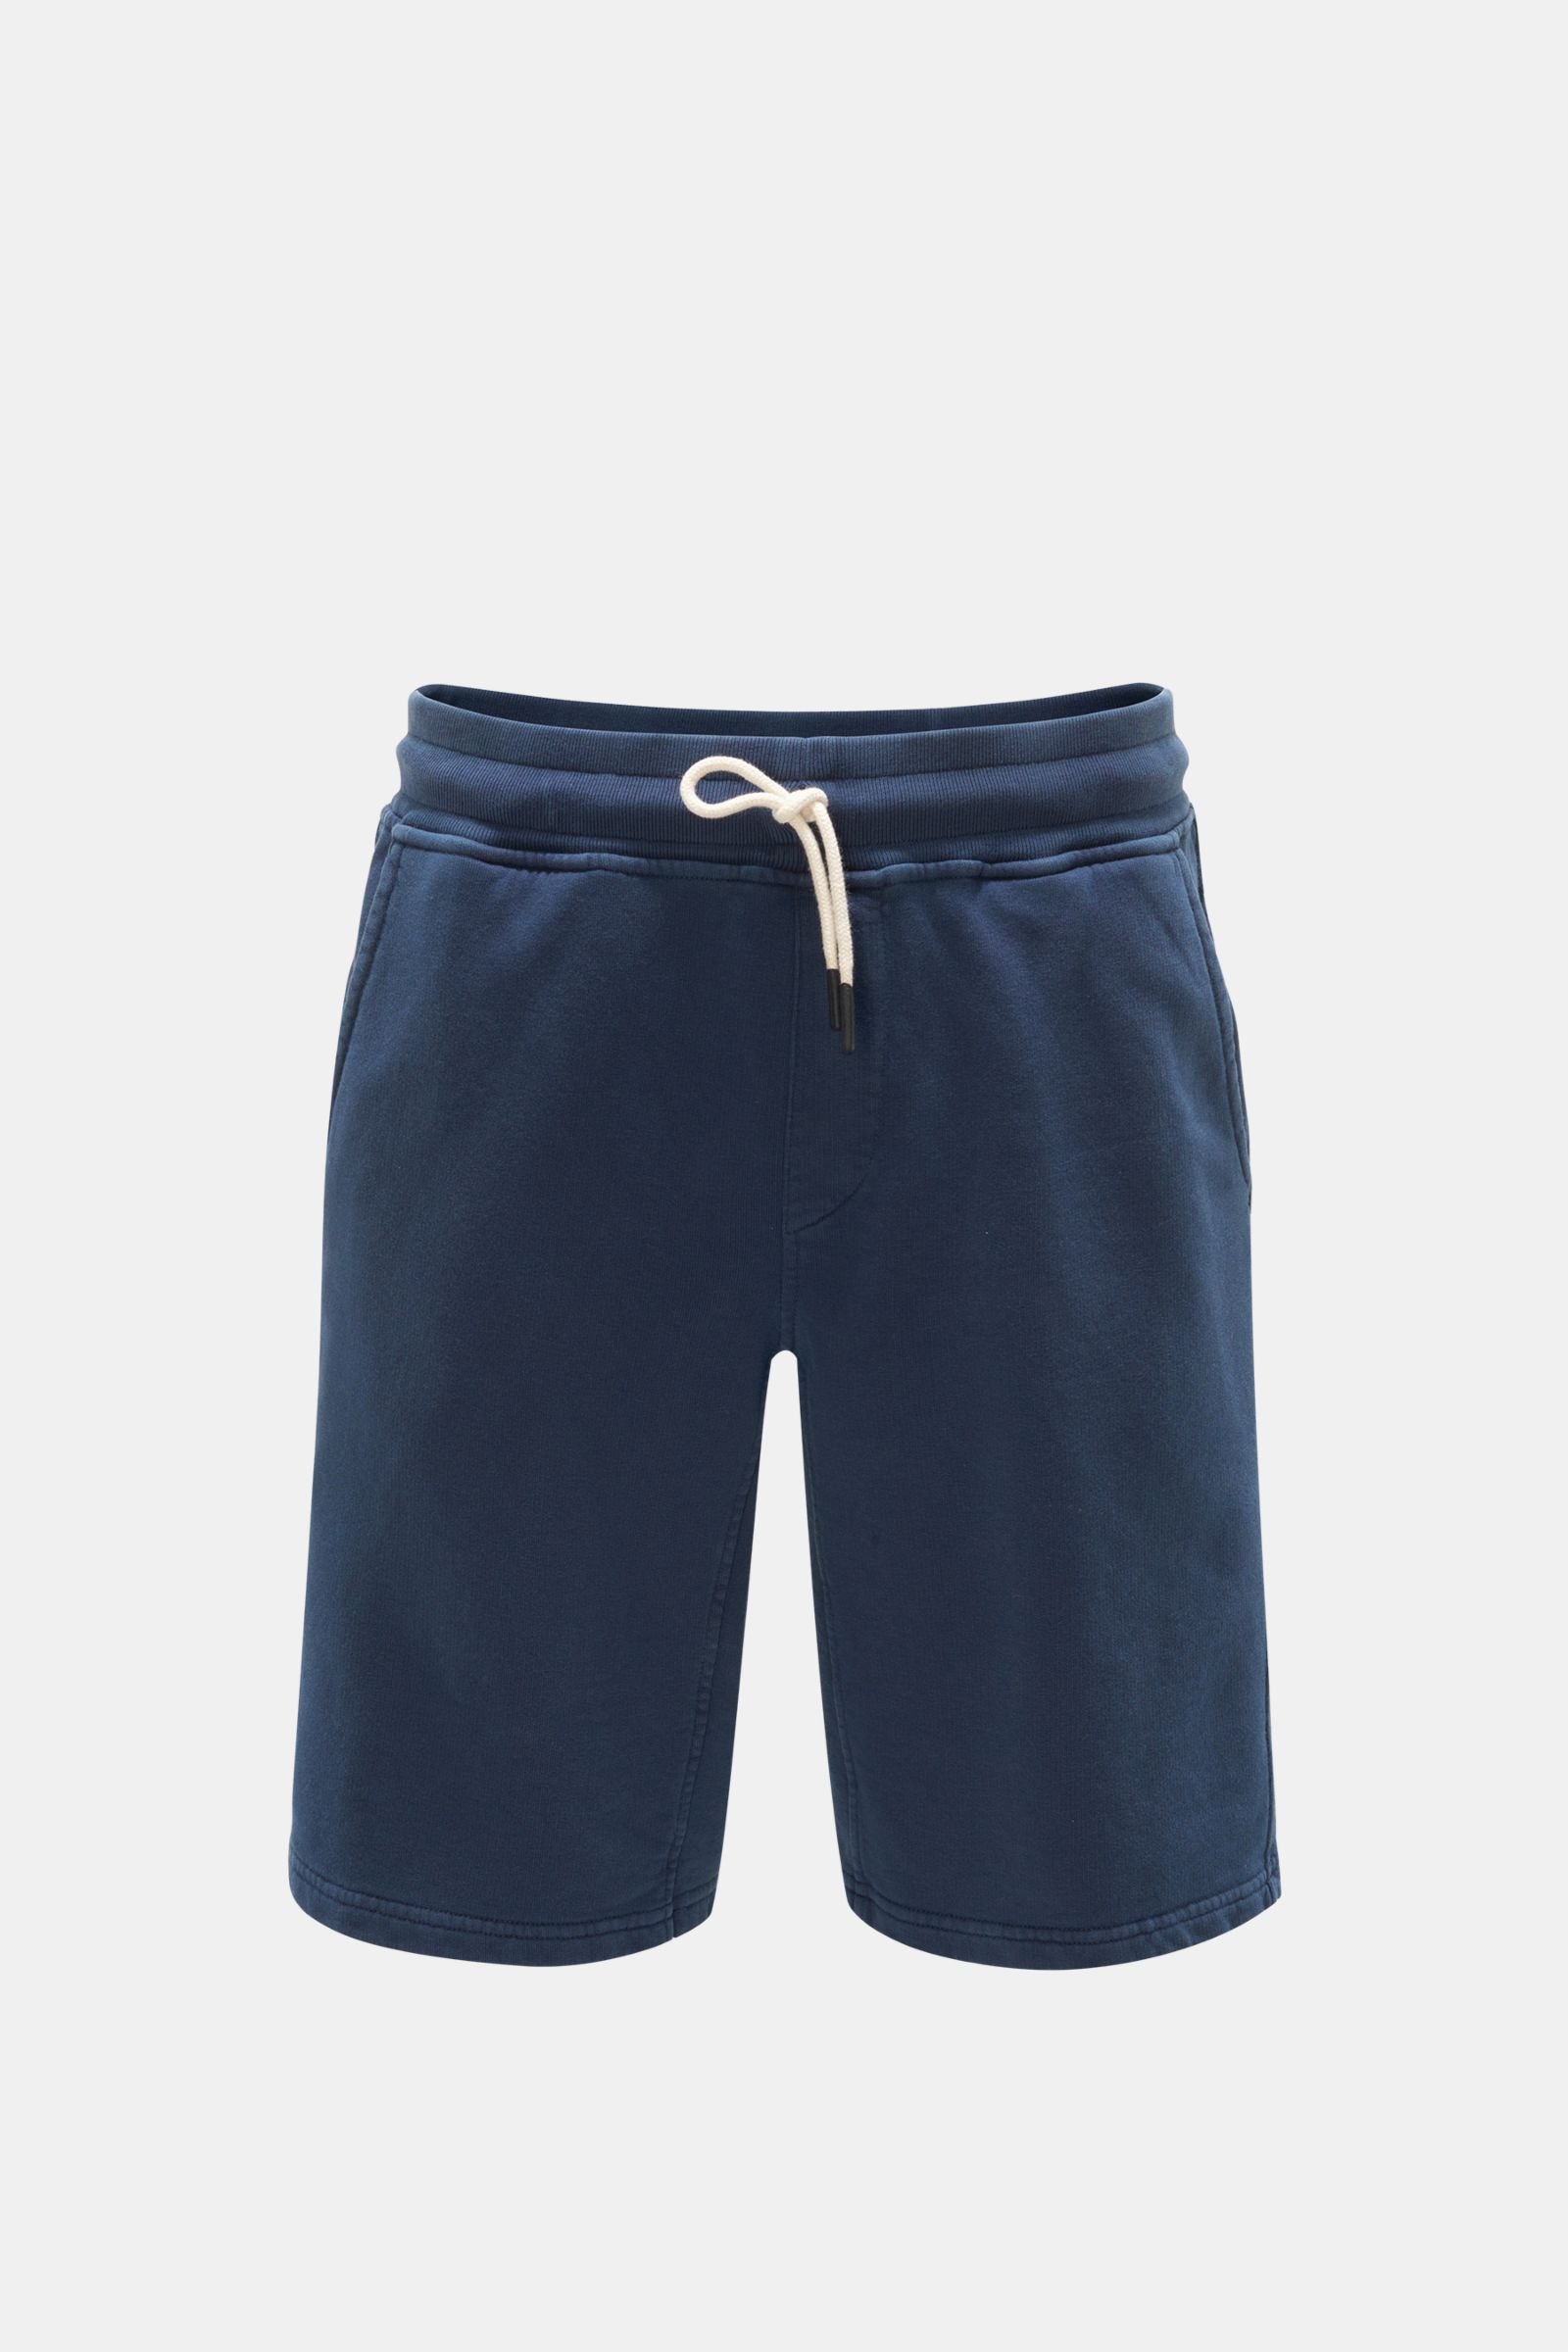 Bermuda sweat shorts navy